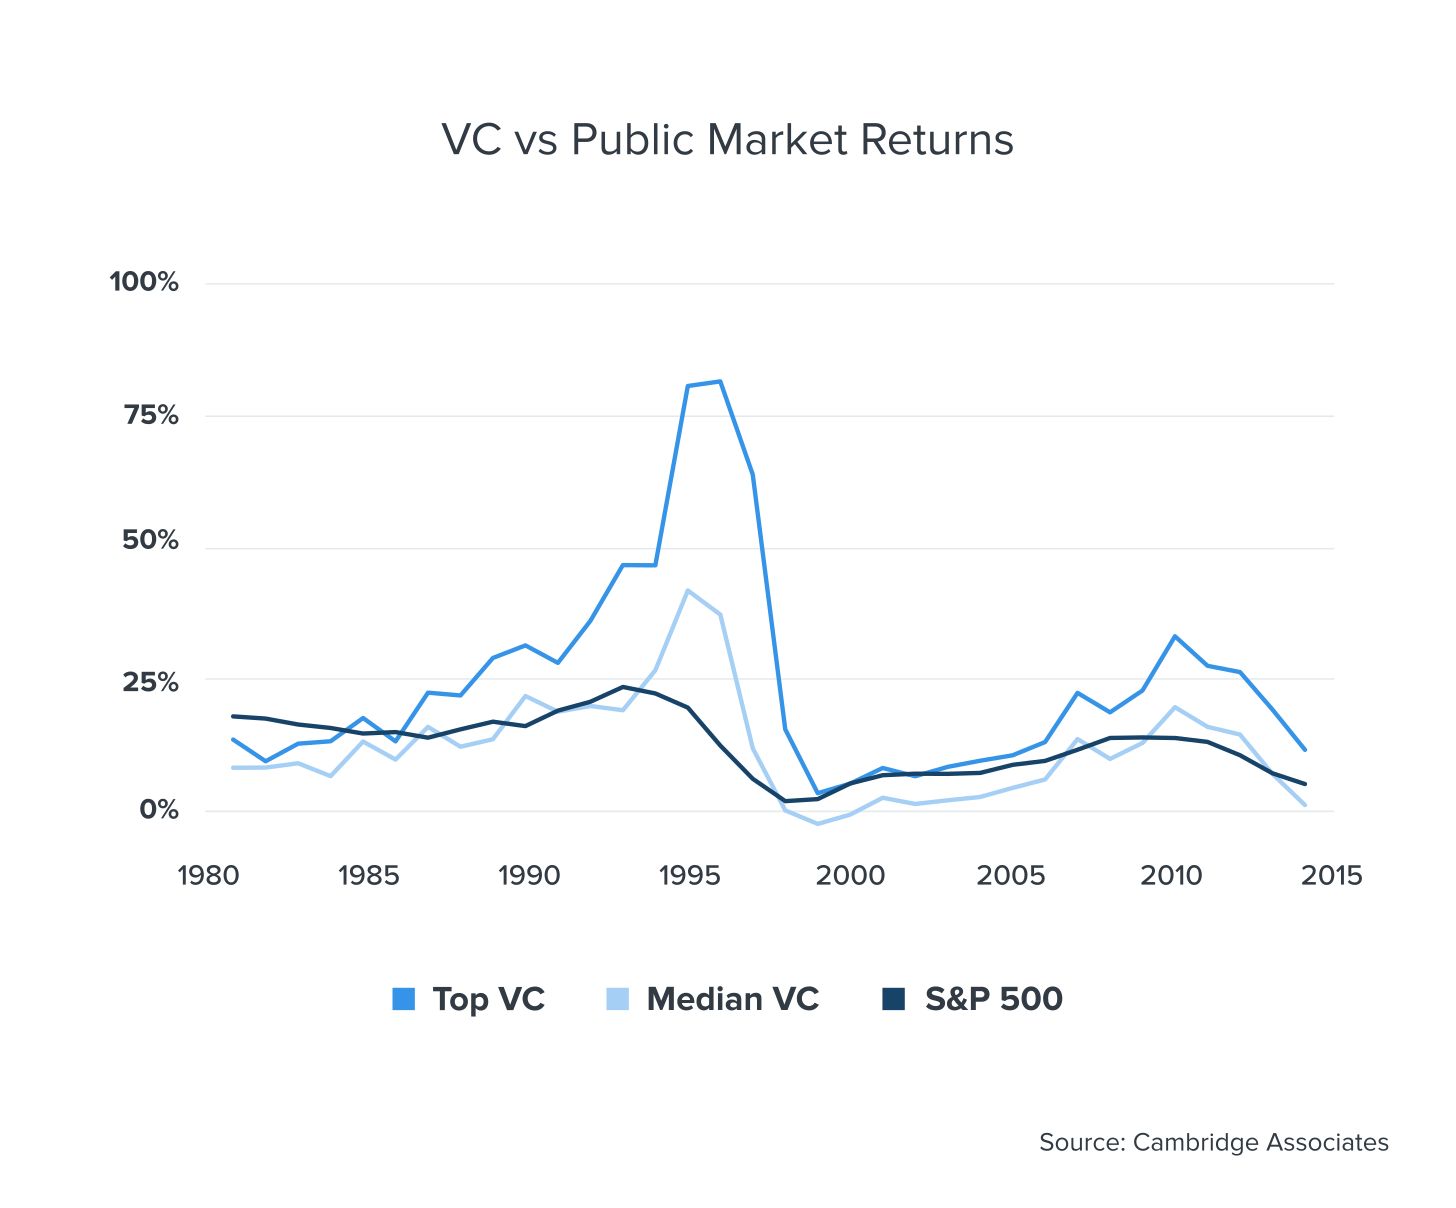 Top VCs vs. Average VCs vs. S&P 500 Returns from 1981 - 2016